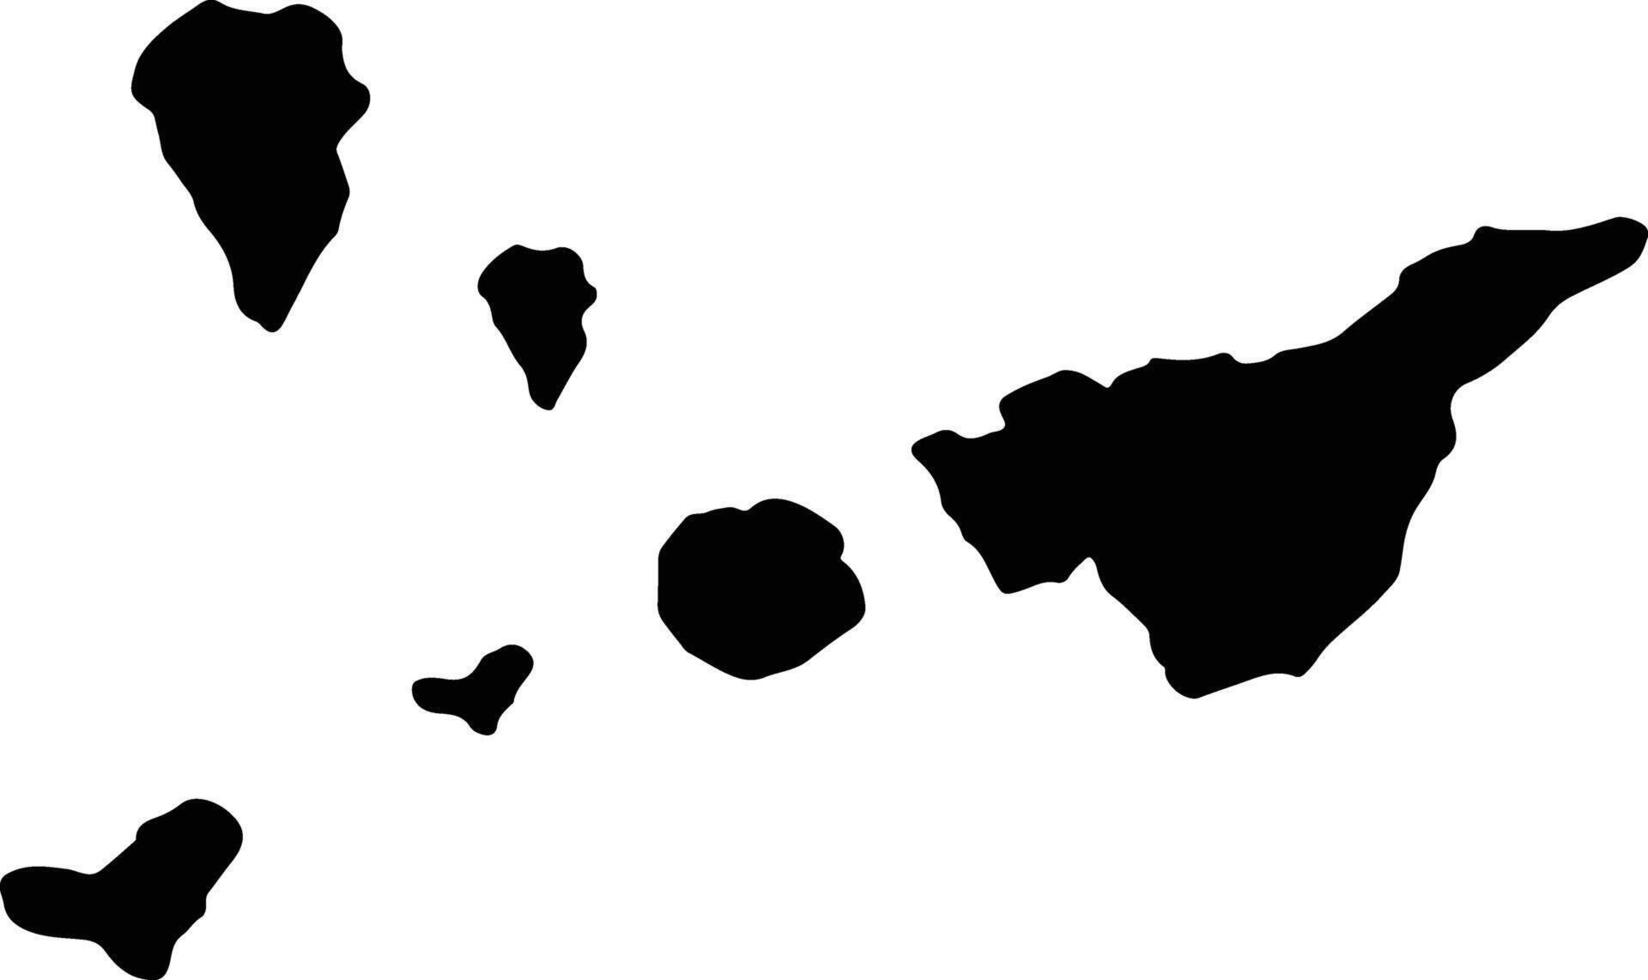 Santa Cruz de tenerife Spagna silhouette carta geografica vettore